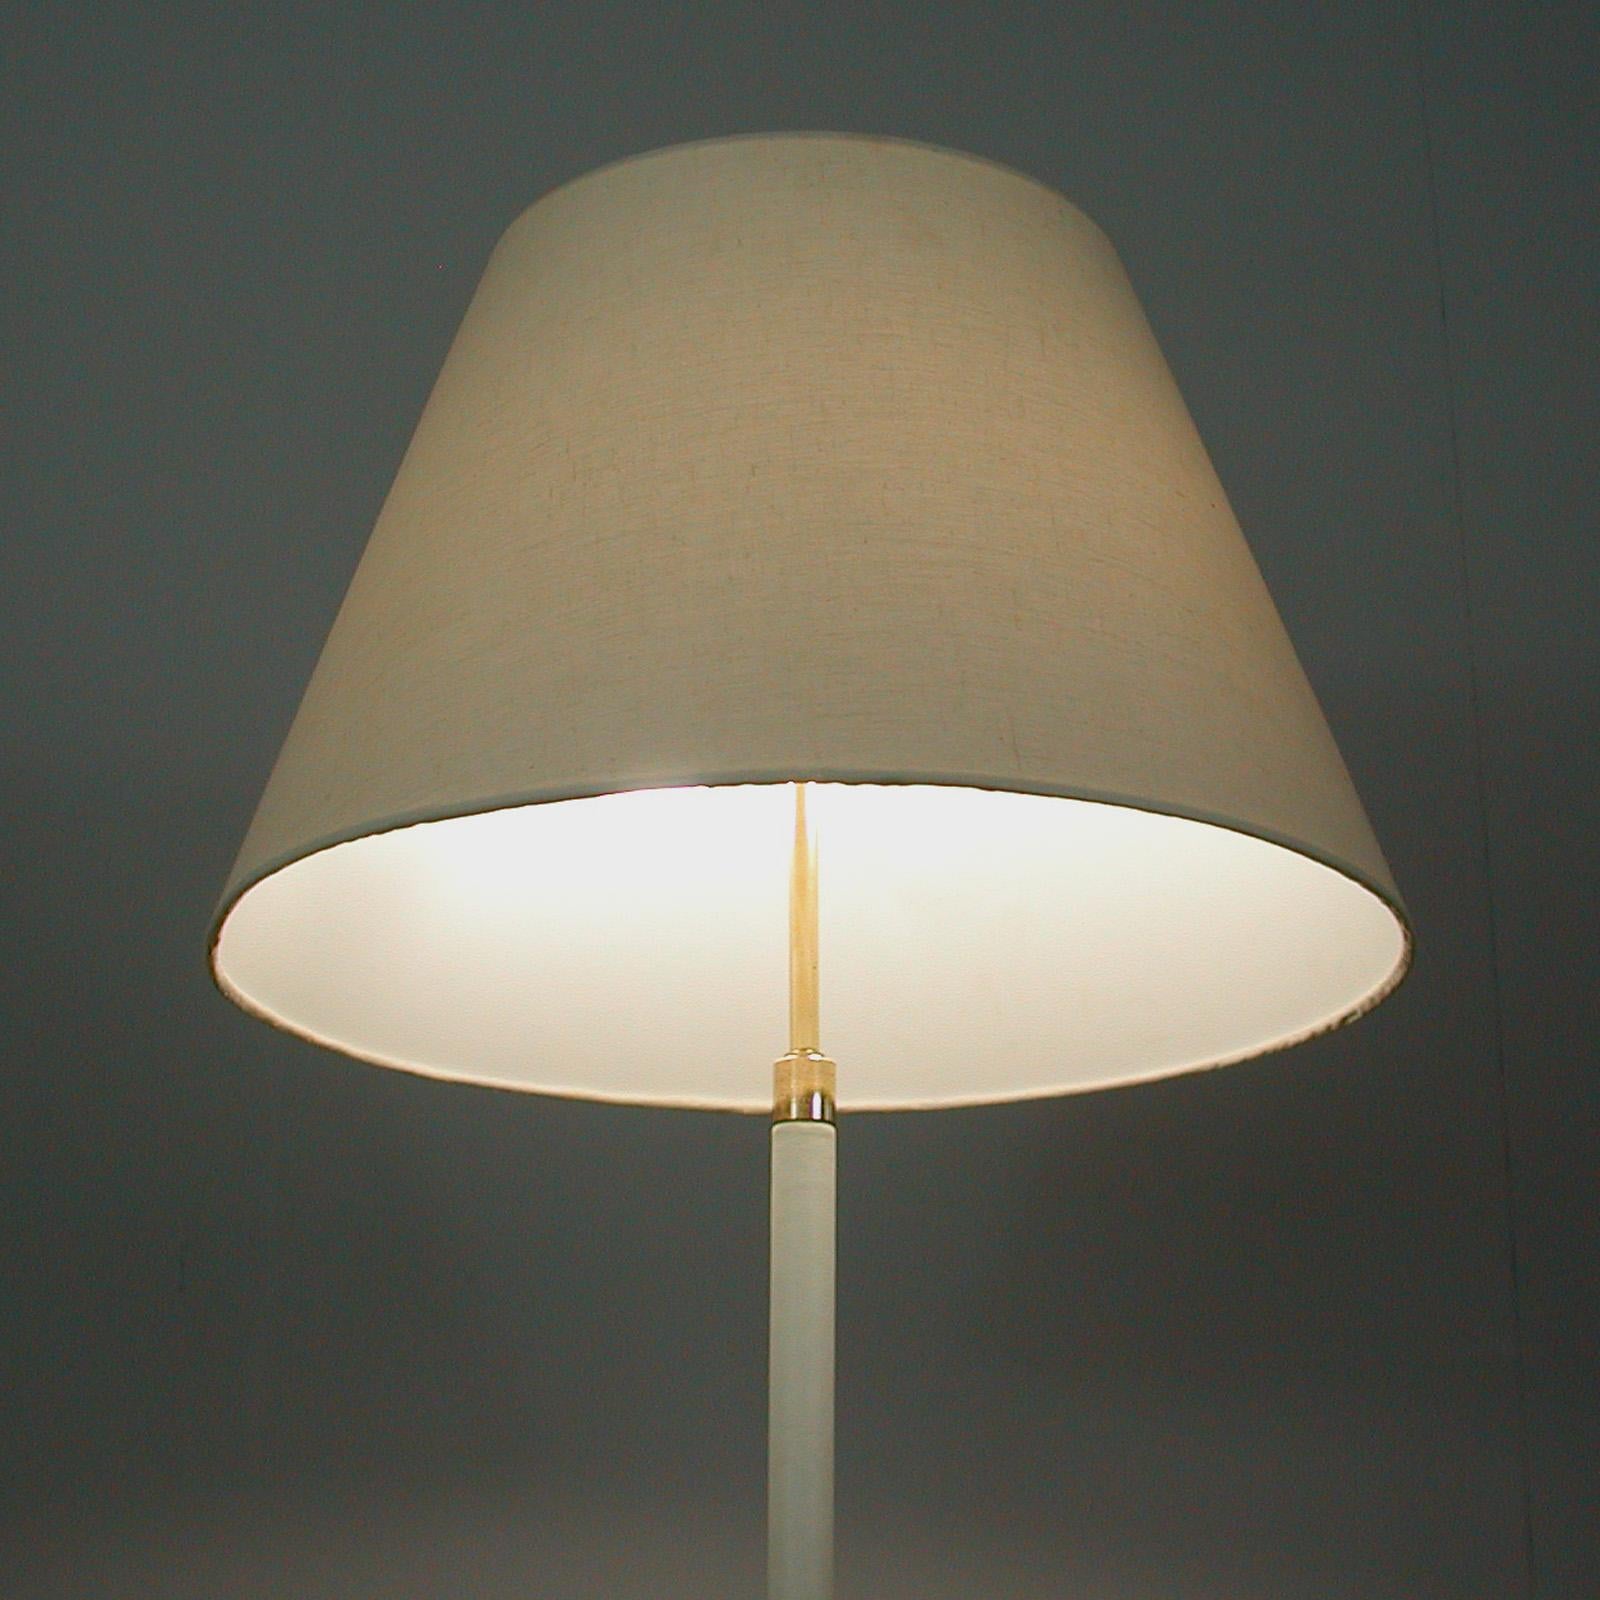 Mid-20th Century Midcentury White Leather and Brass Floor Lamp by Vereinigte Werkstätten, 1950s For Sale